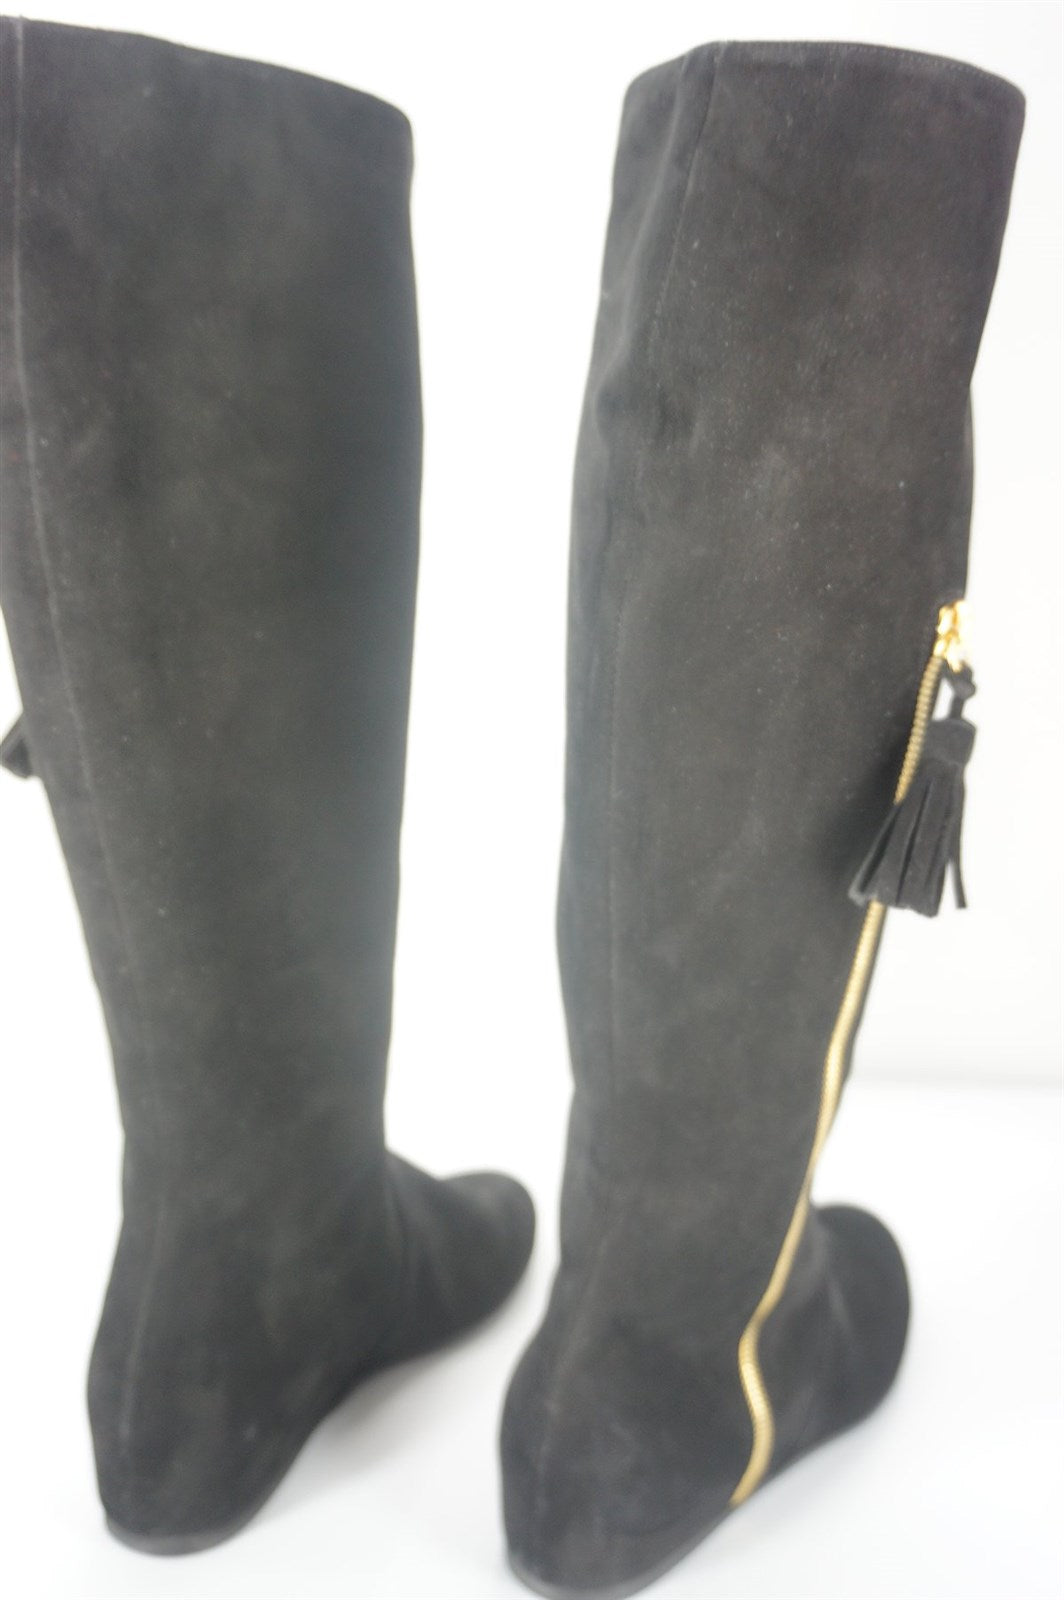 Stuart Weitzman Tass black suede wedge Tall boots size 6.5 New $635 gold zip